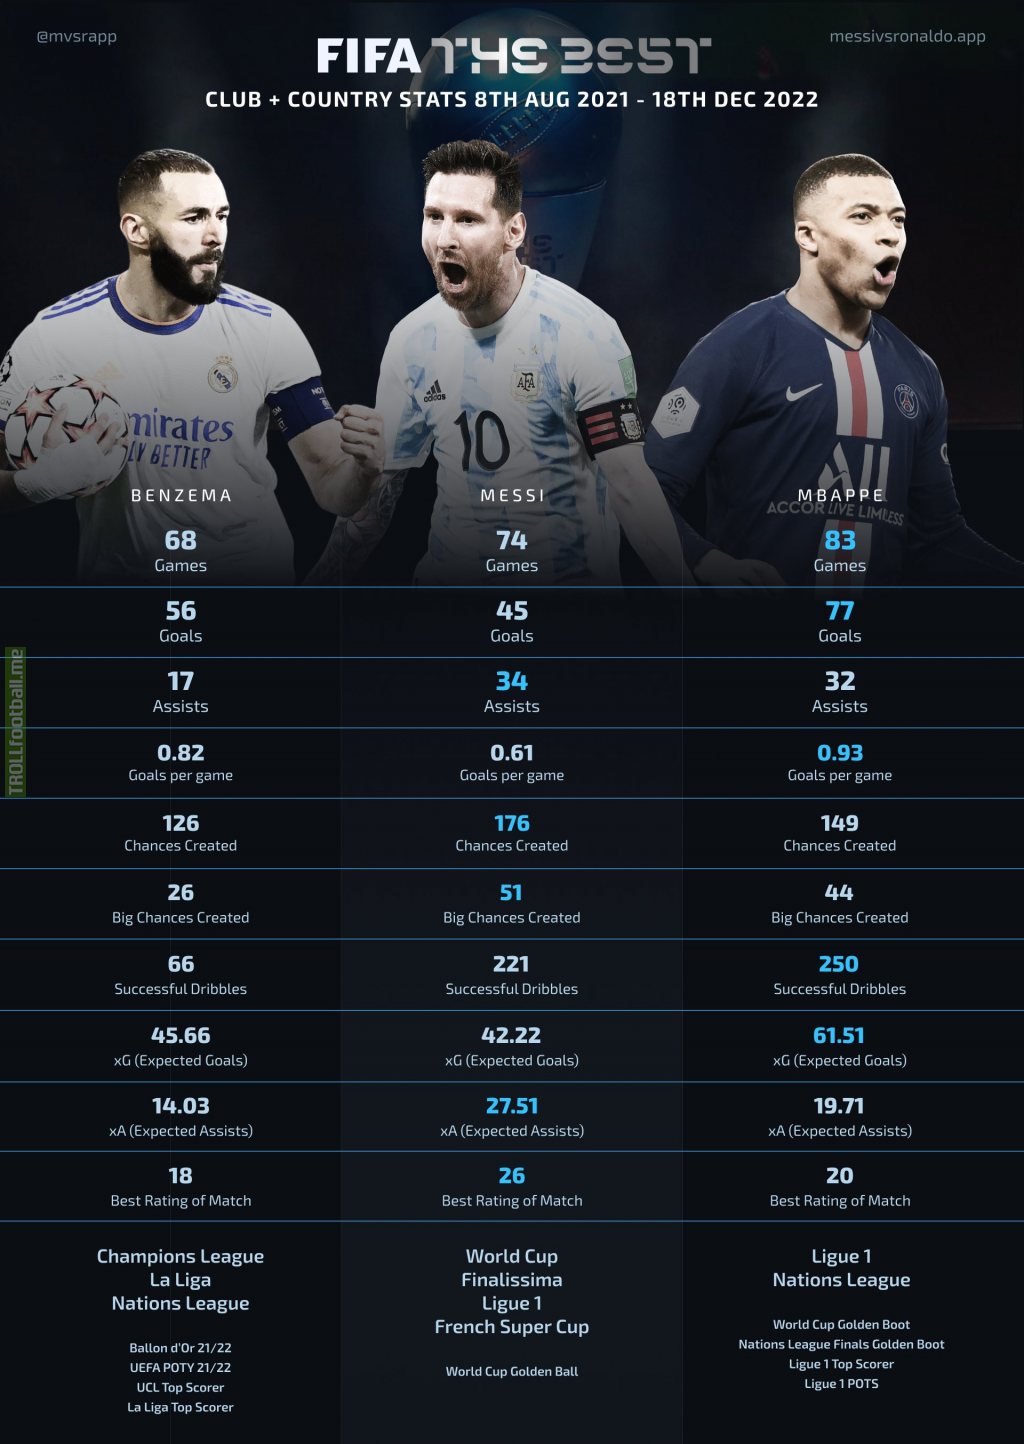 Benzema vs Messi vs Mbappe comparison for the FIFA Best award.